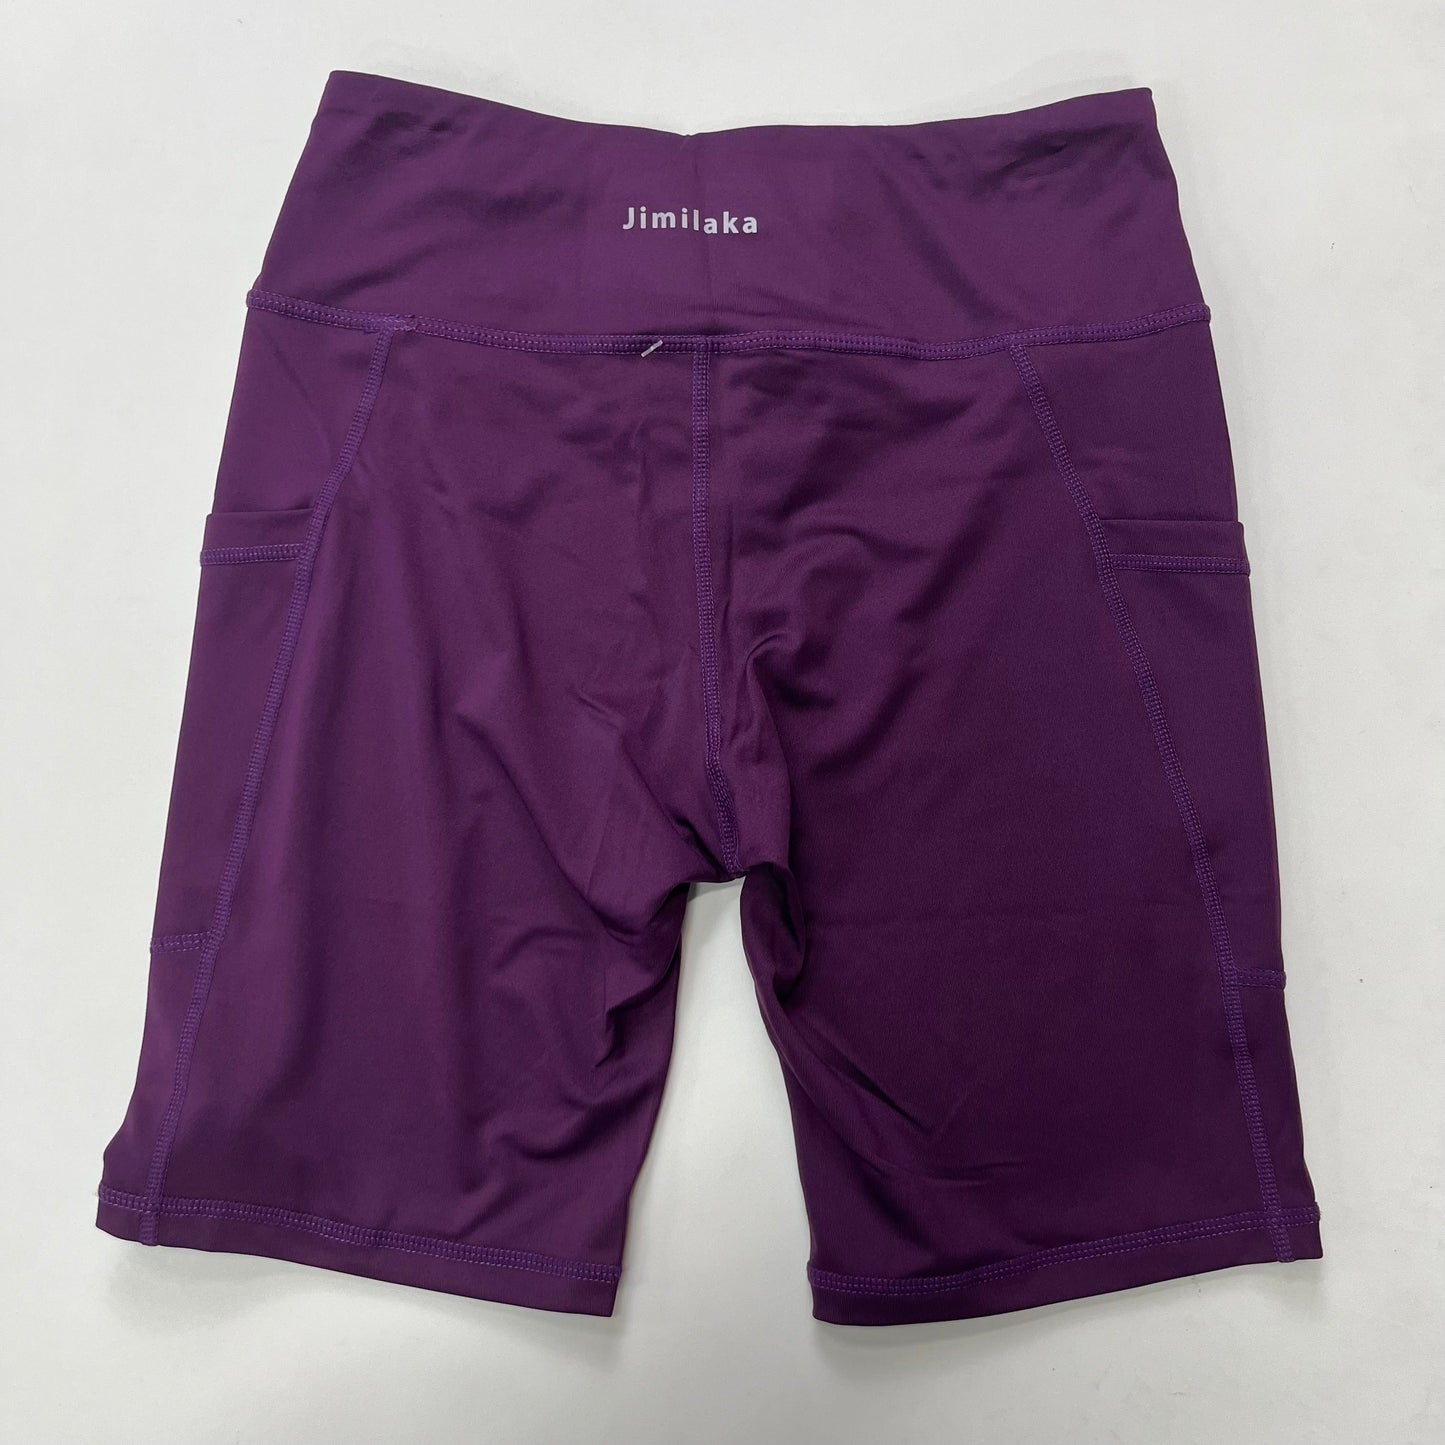 Athletic Shorts By Jimilaka  Size: S